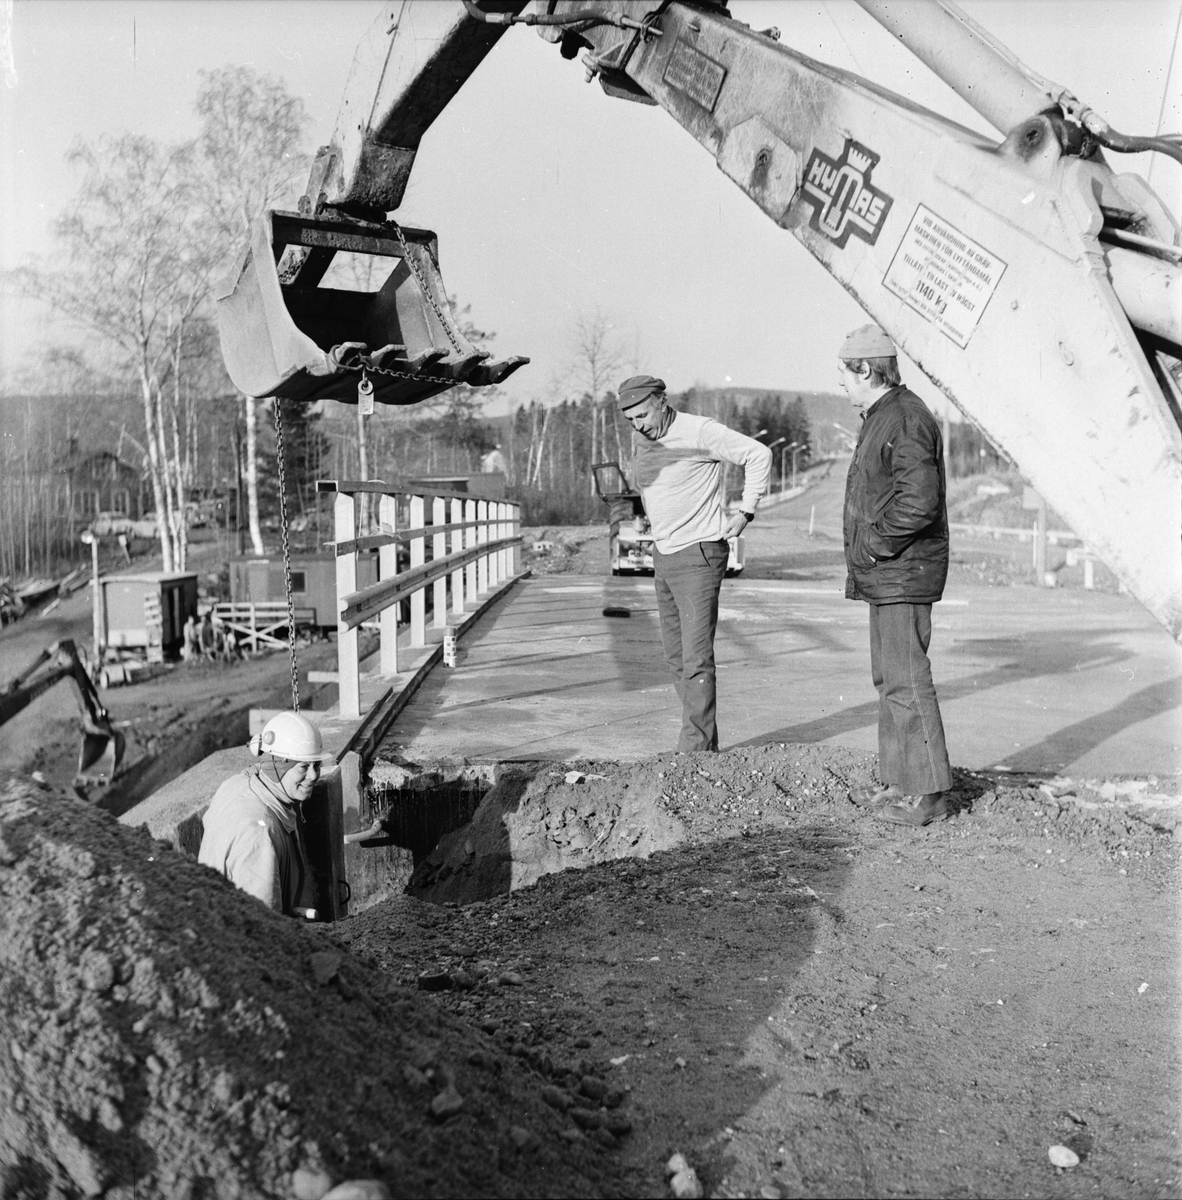 Nya bron i Forsbro.
Oktober 1973